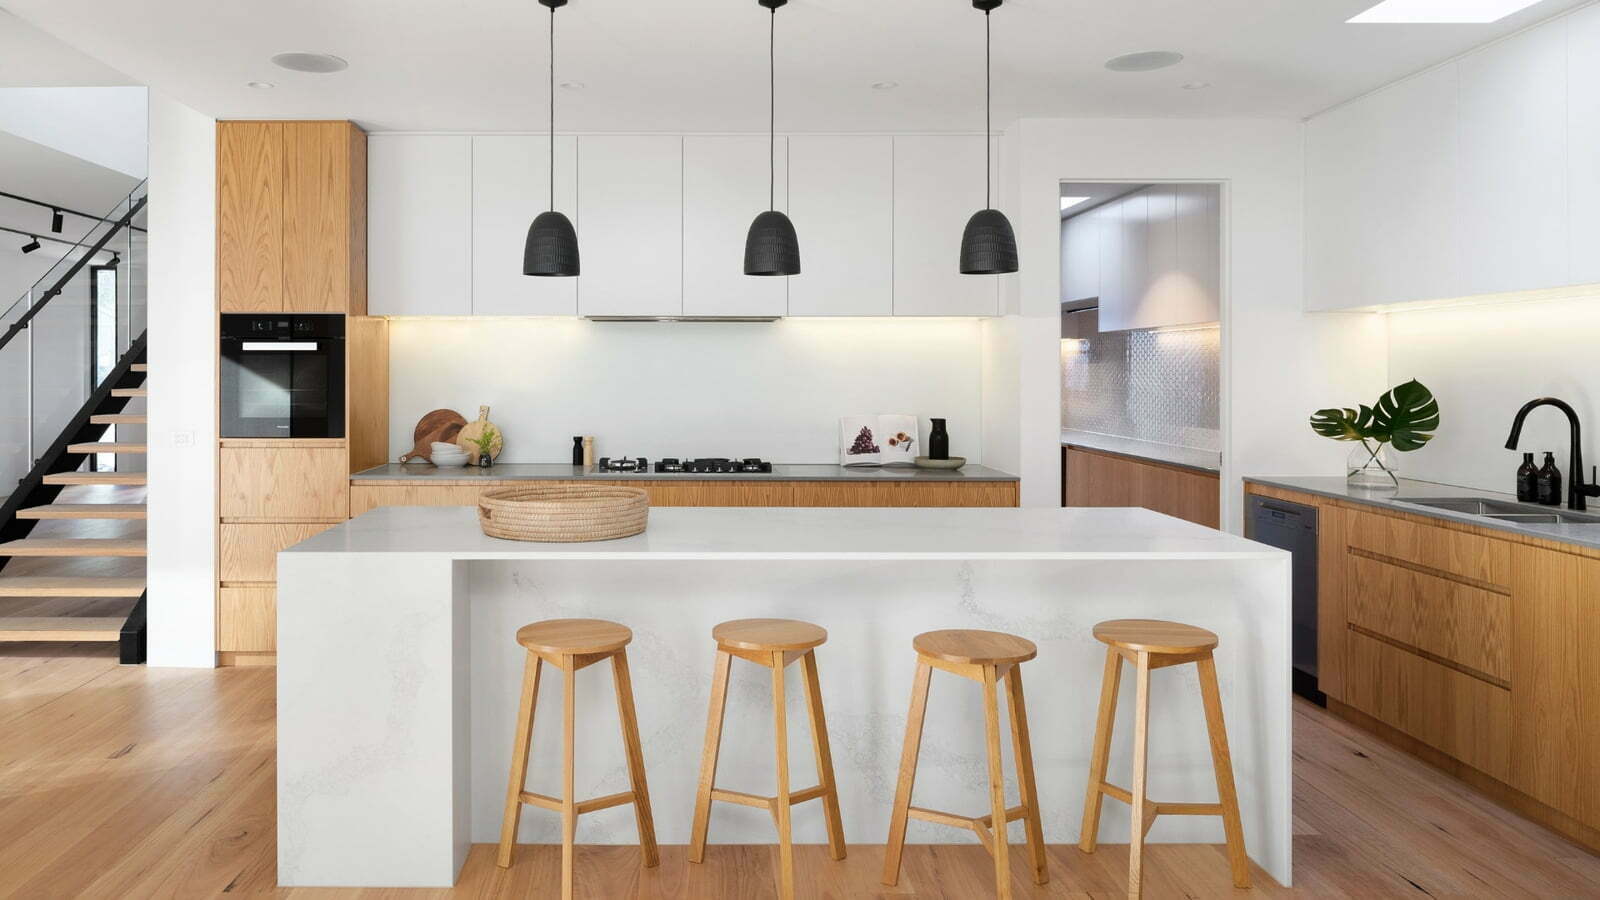 foley remodeling midcentury kitchen design ideas